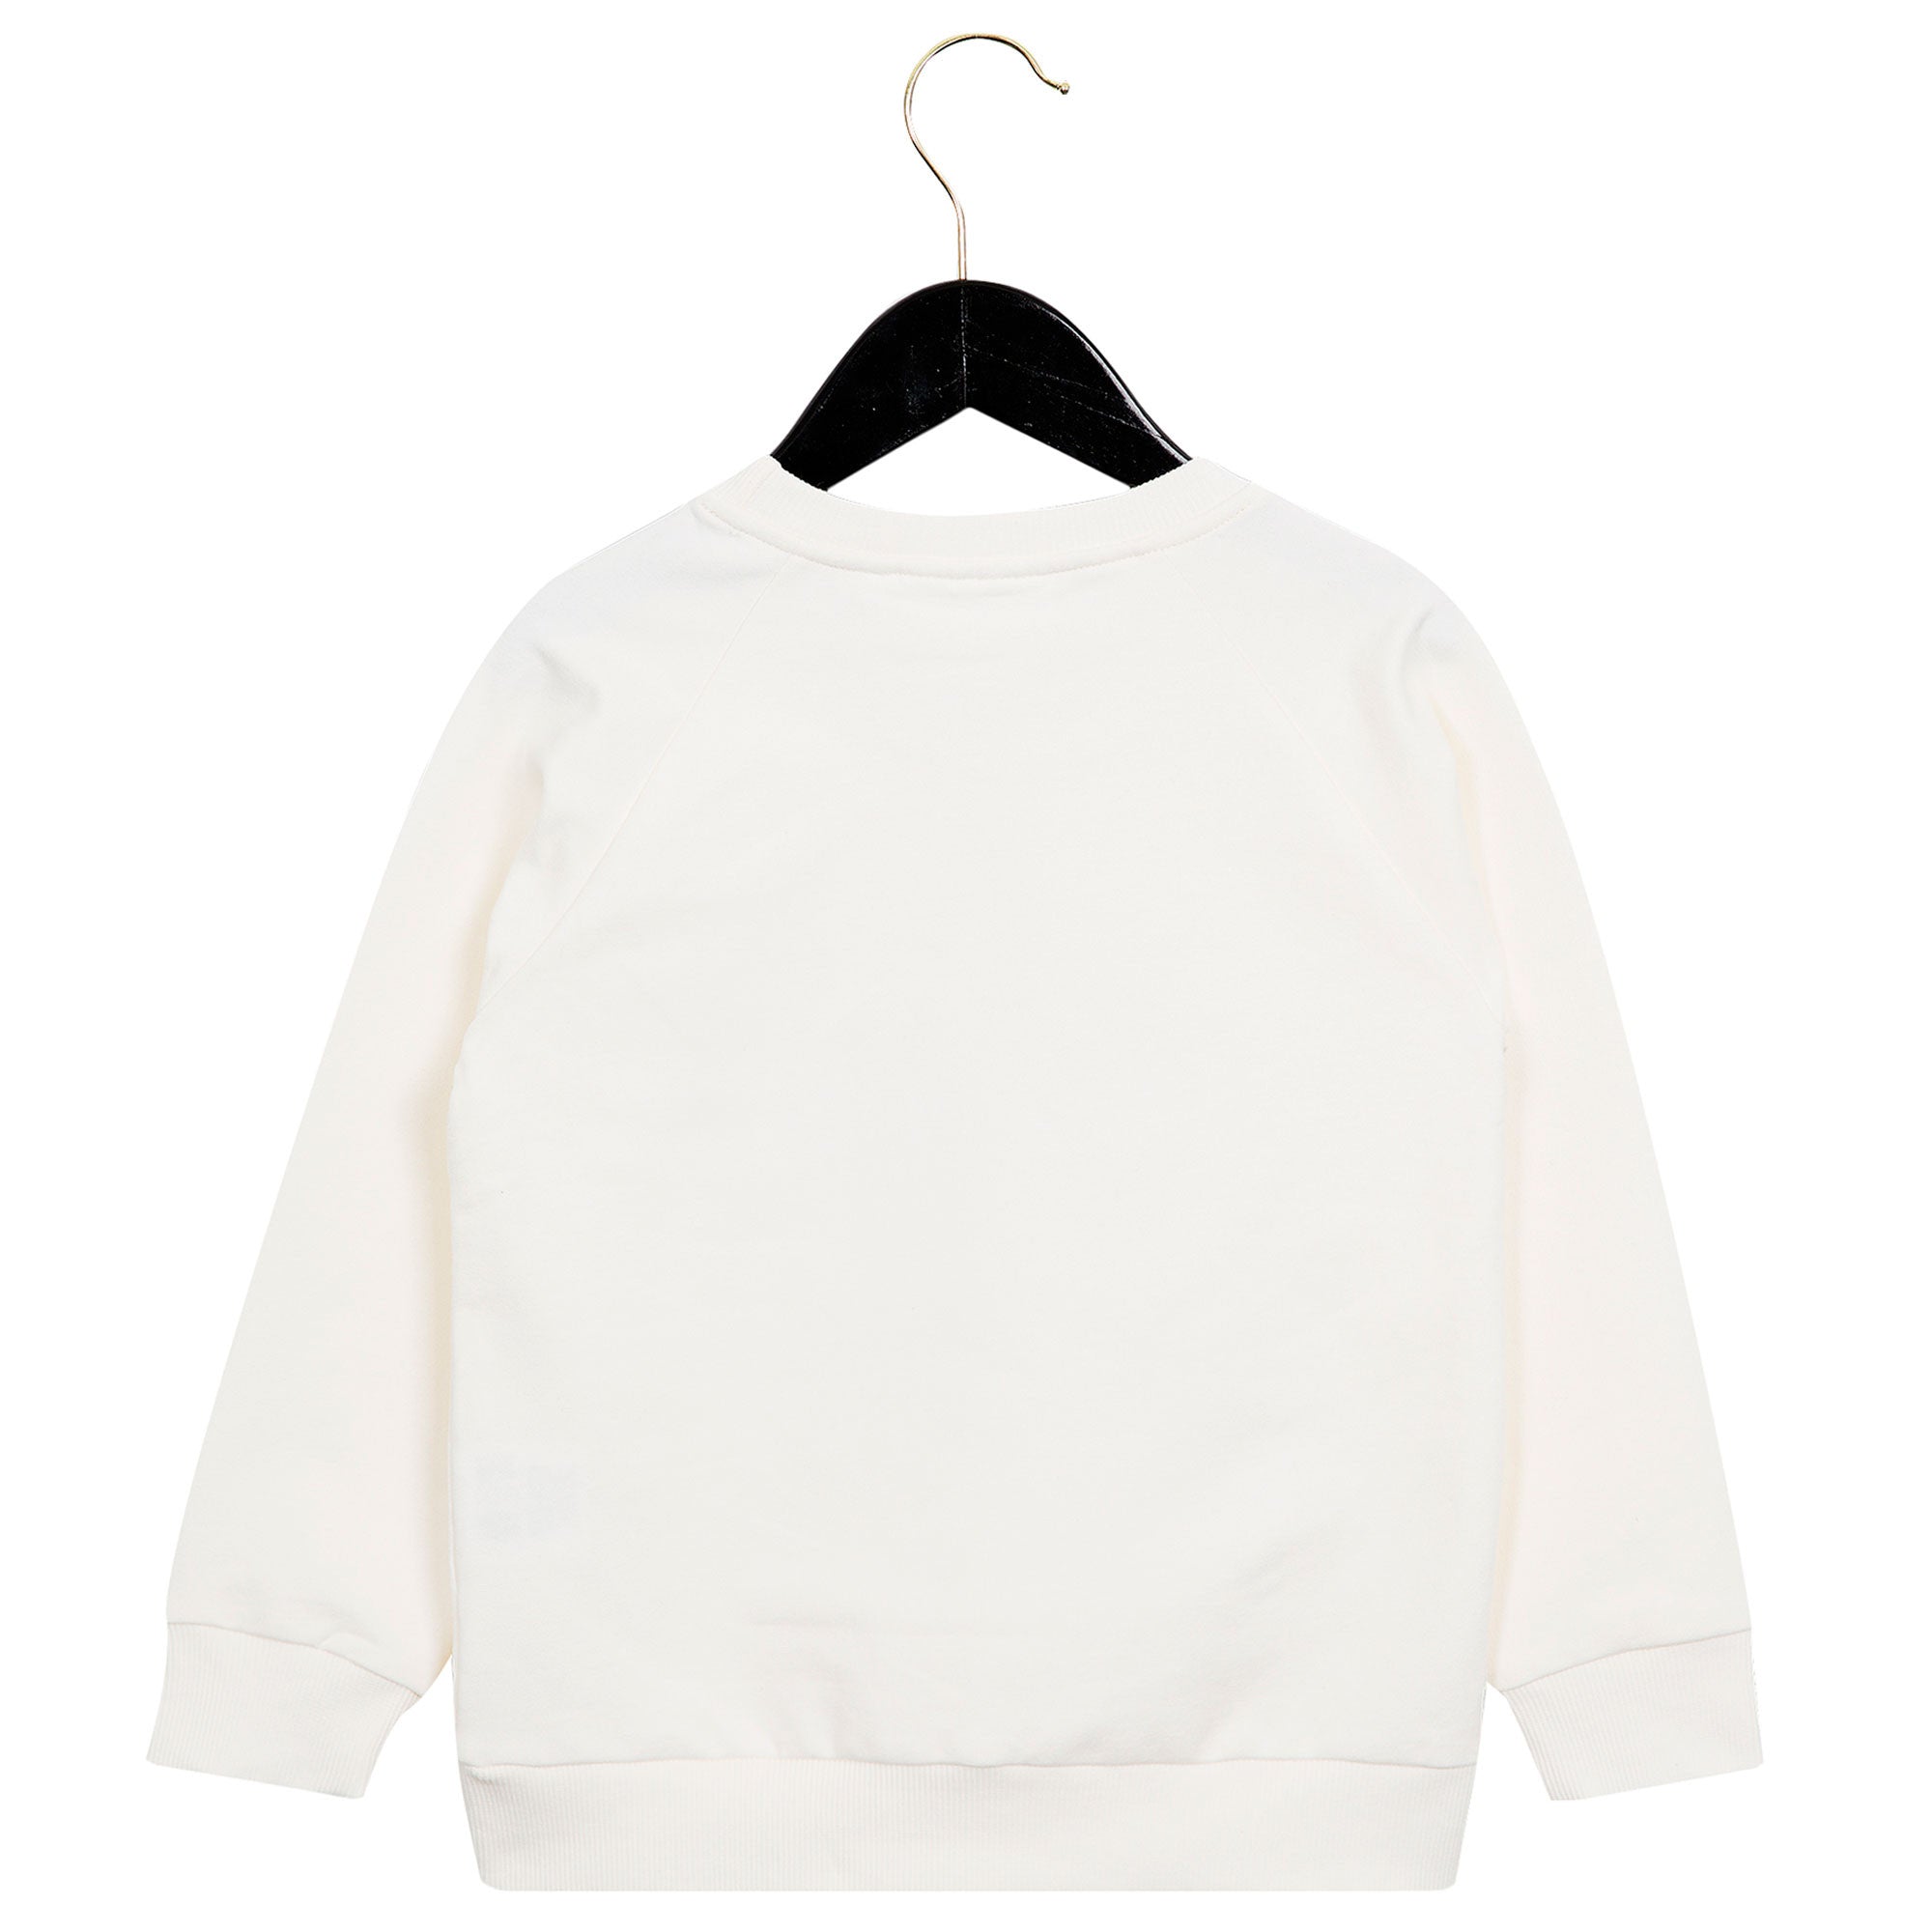 Girls White Cotton Sweatshirt With Green Apple Print Trims - CÉMAROSE | Children's Fashion Store - 2